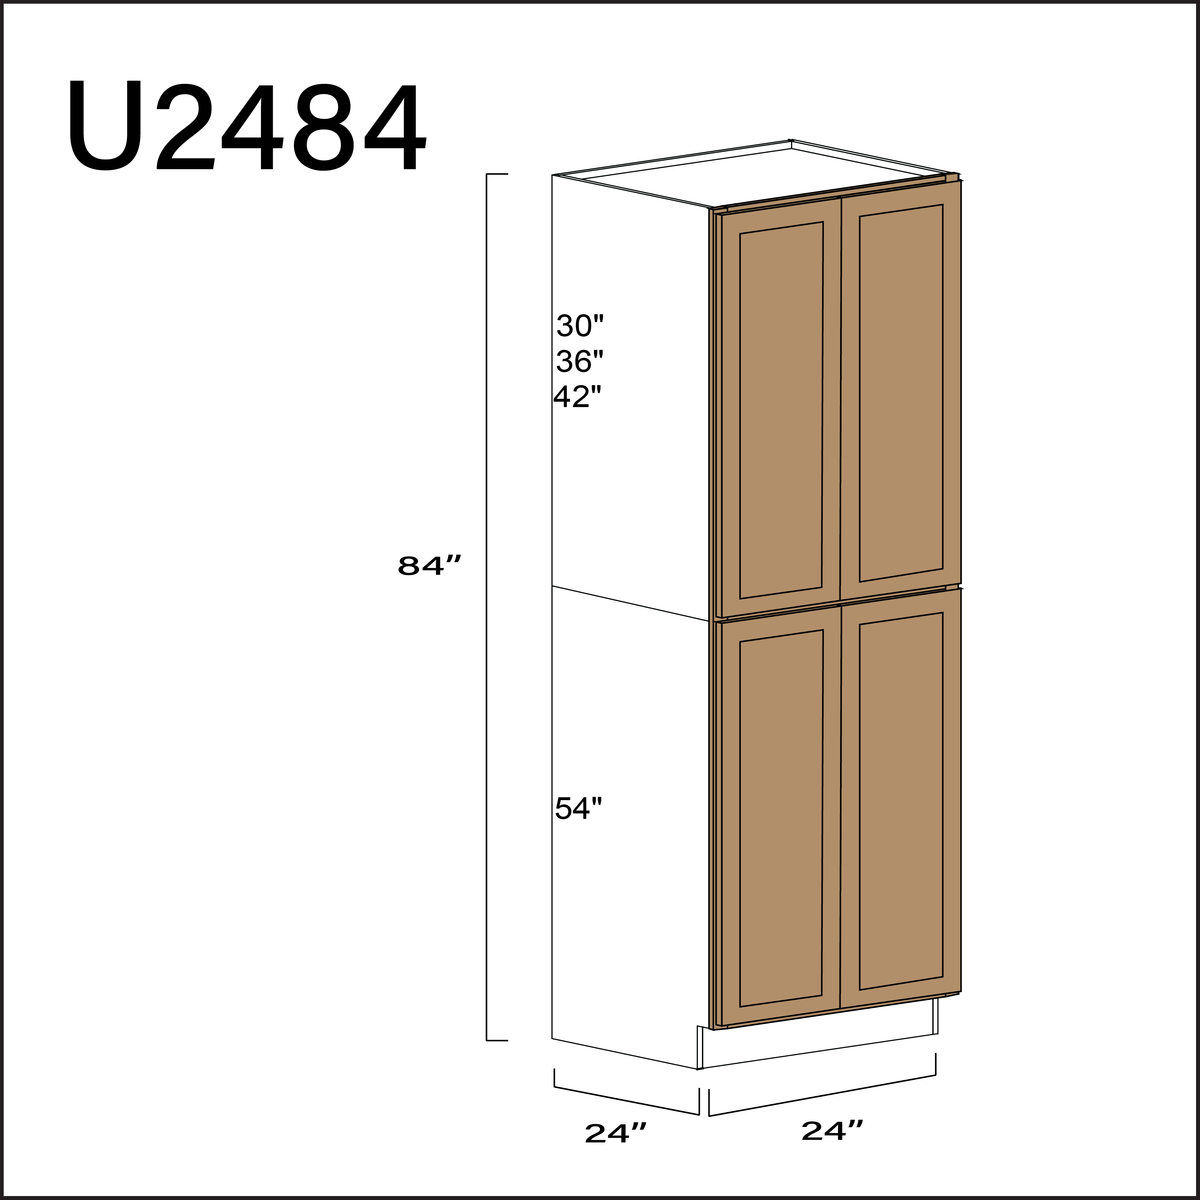 Alton Iced Mocha Double Door Pantry Cabinet - 24" W x 84" H x 24" D